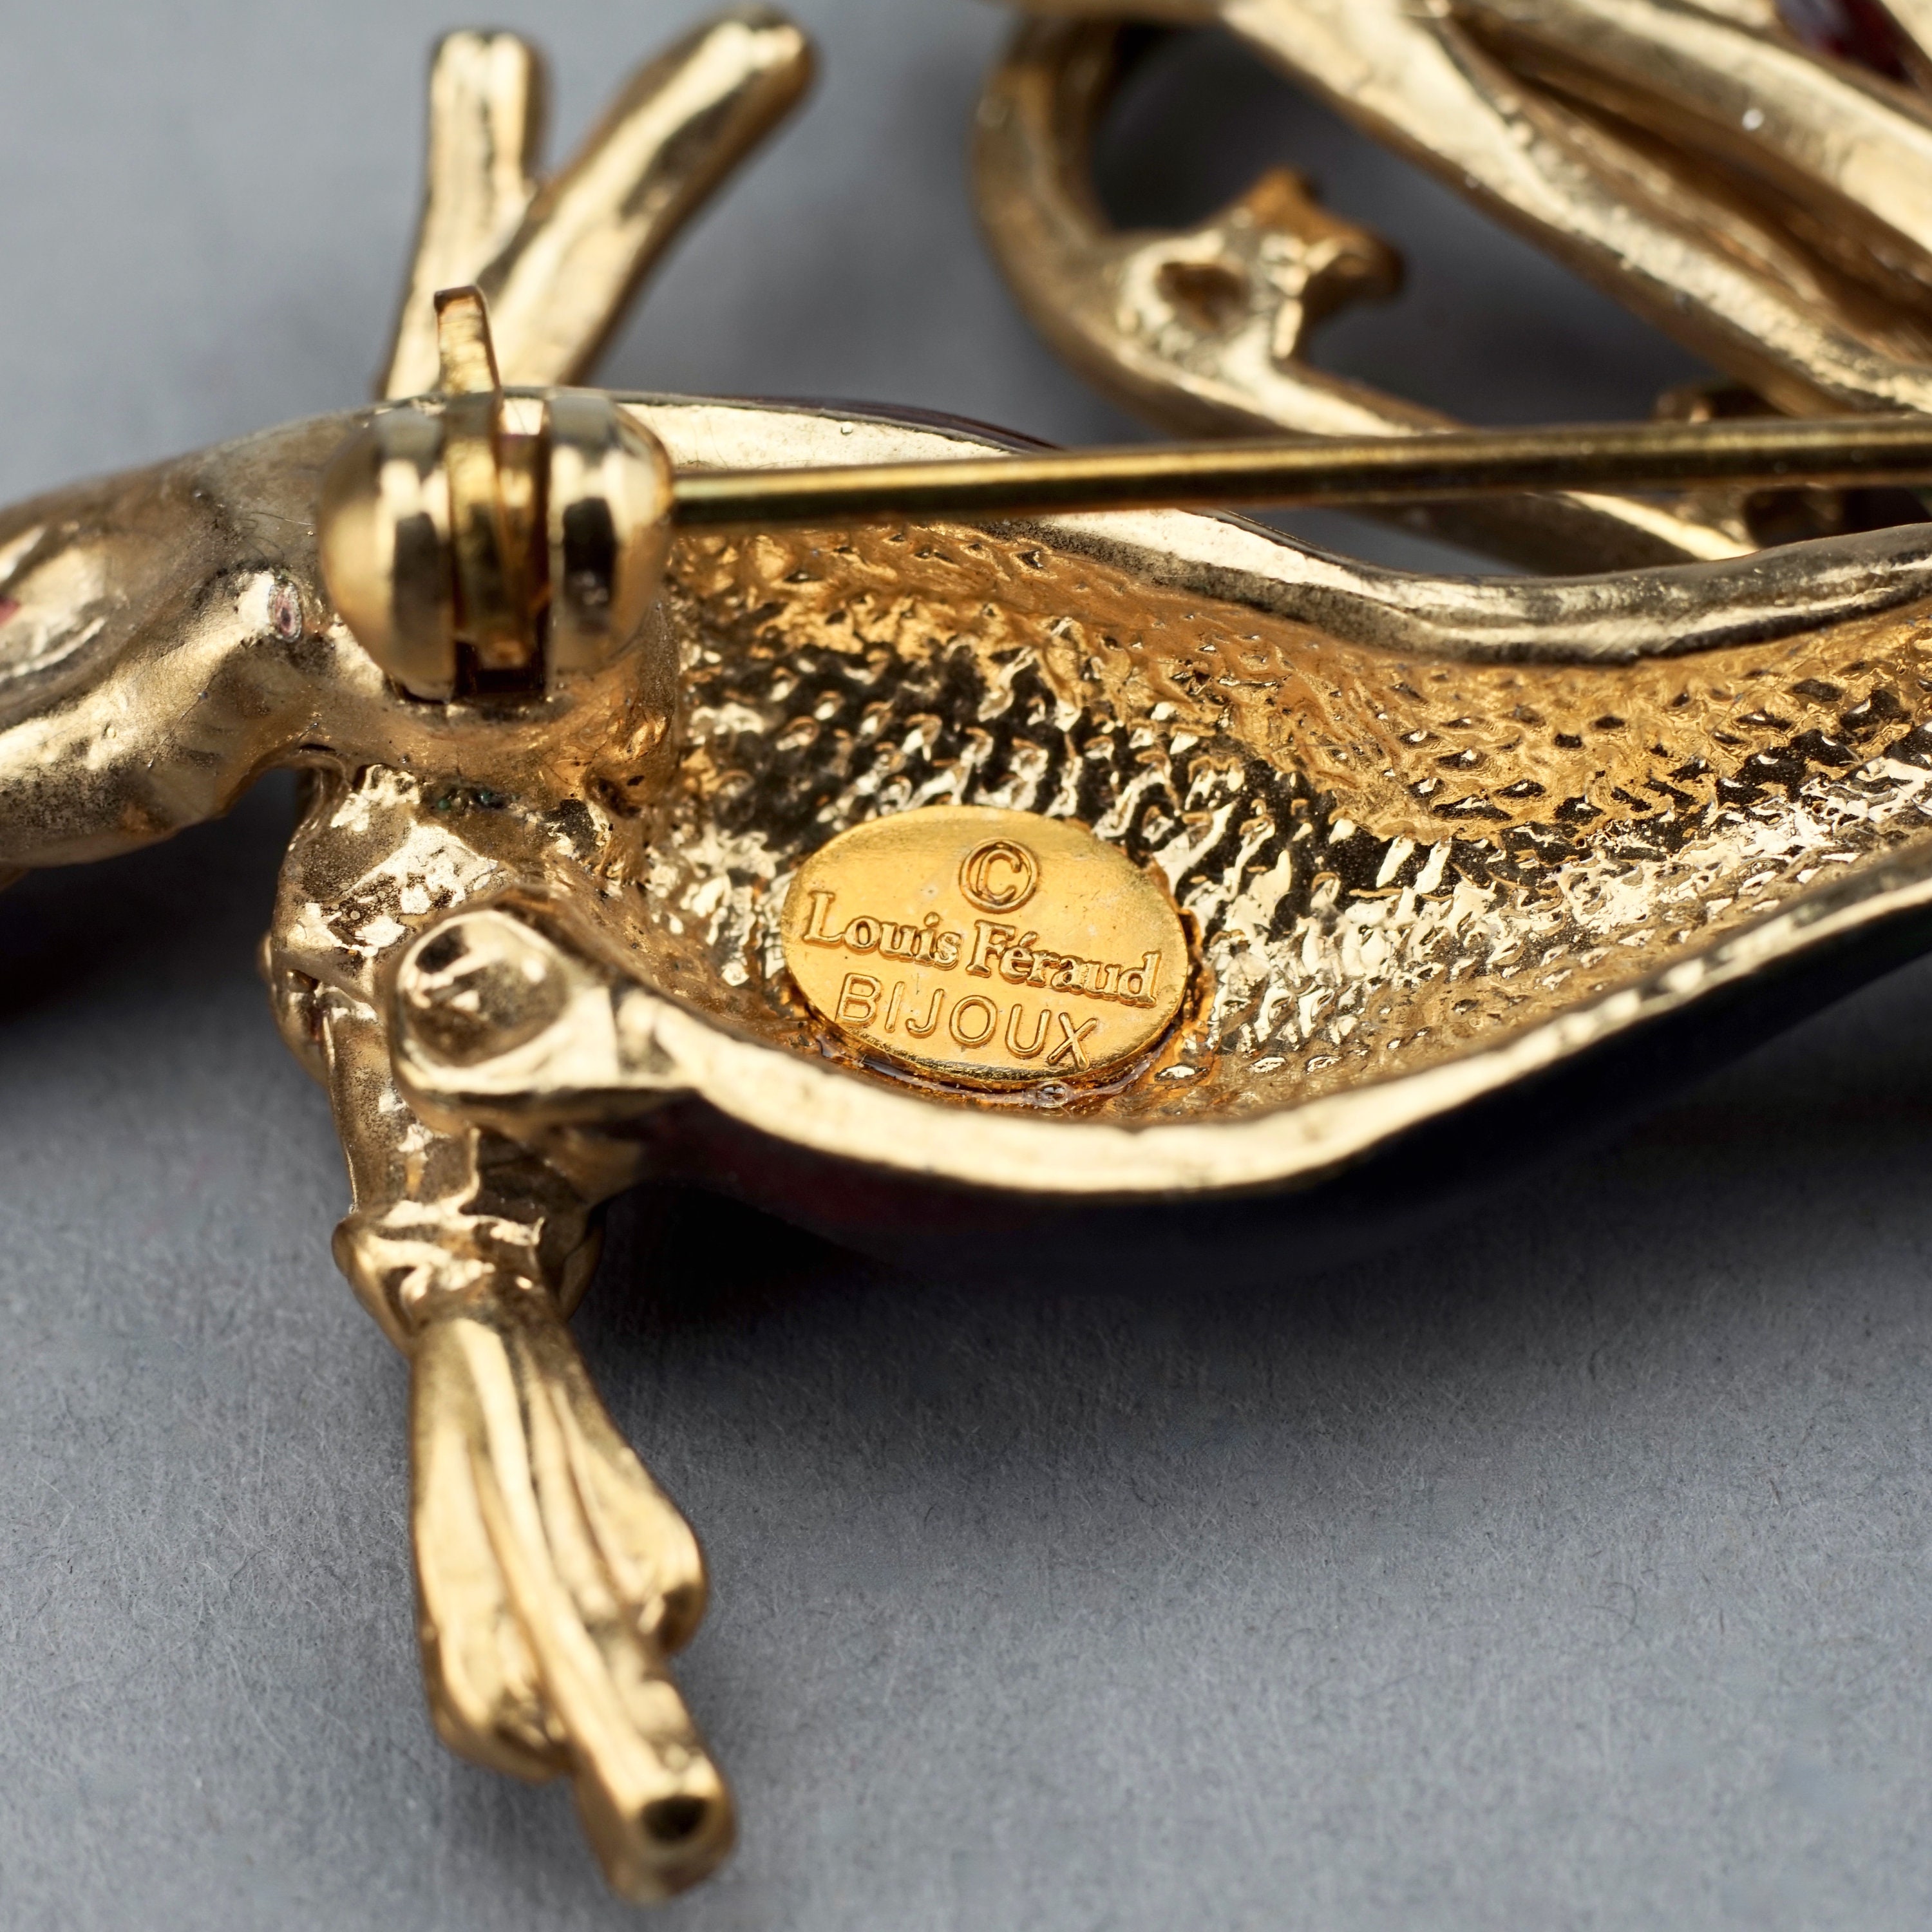 Vintage LOUIS FERAUD Jewelled Bird Enamel Brooch For Sale at